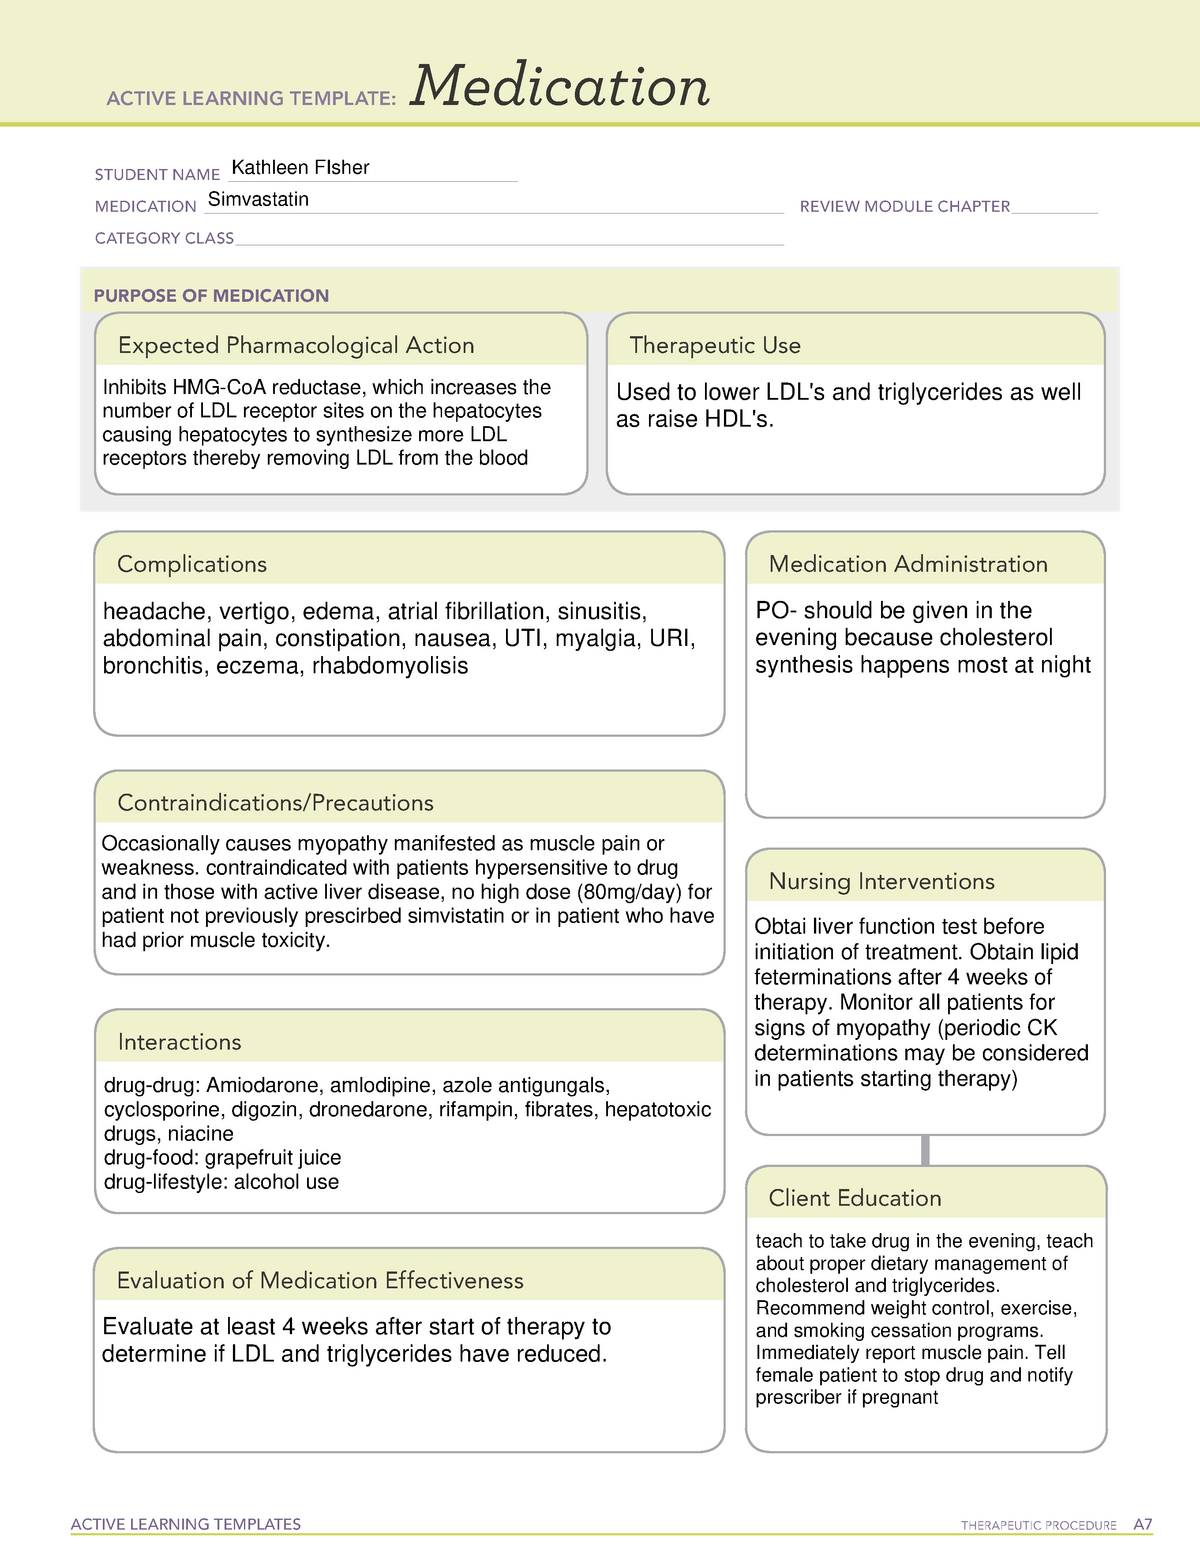 Medtemp simvastatin ATI medication/system template ACTIVE LEARNING